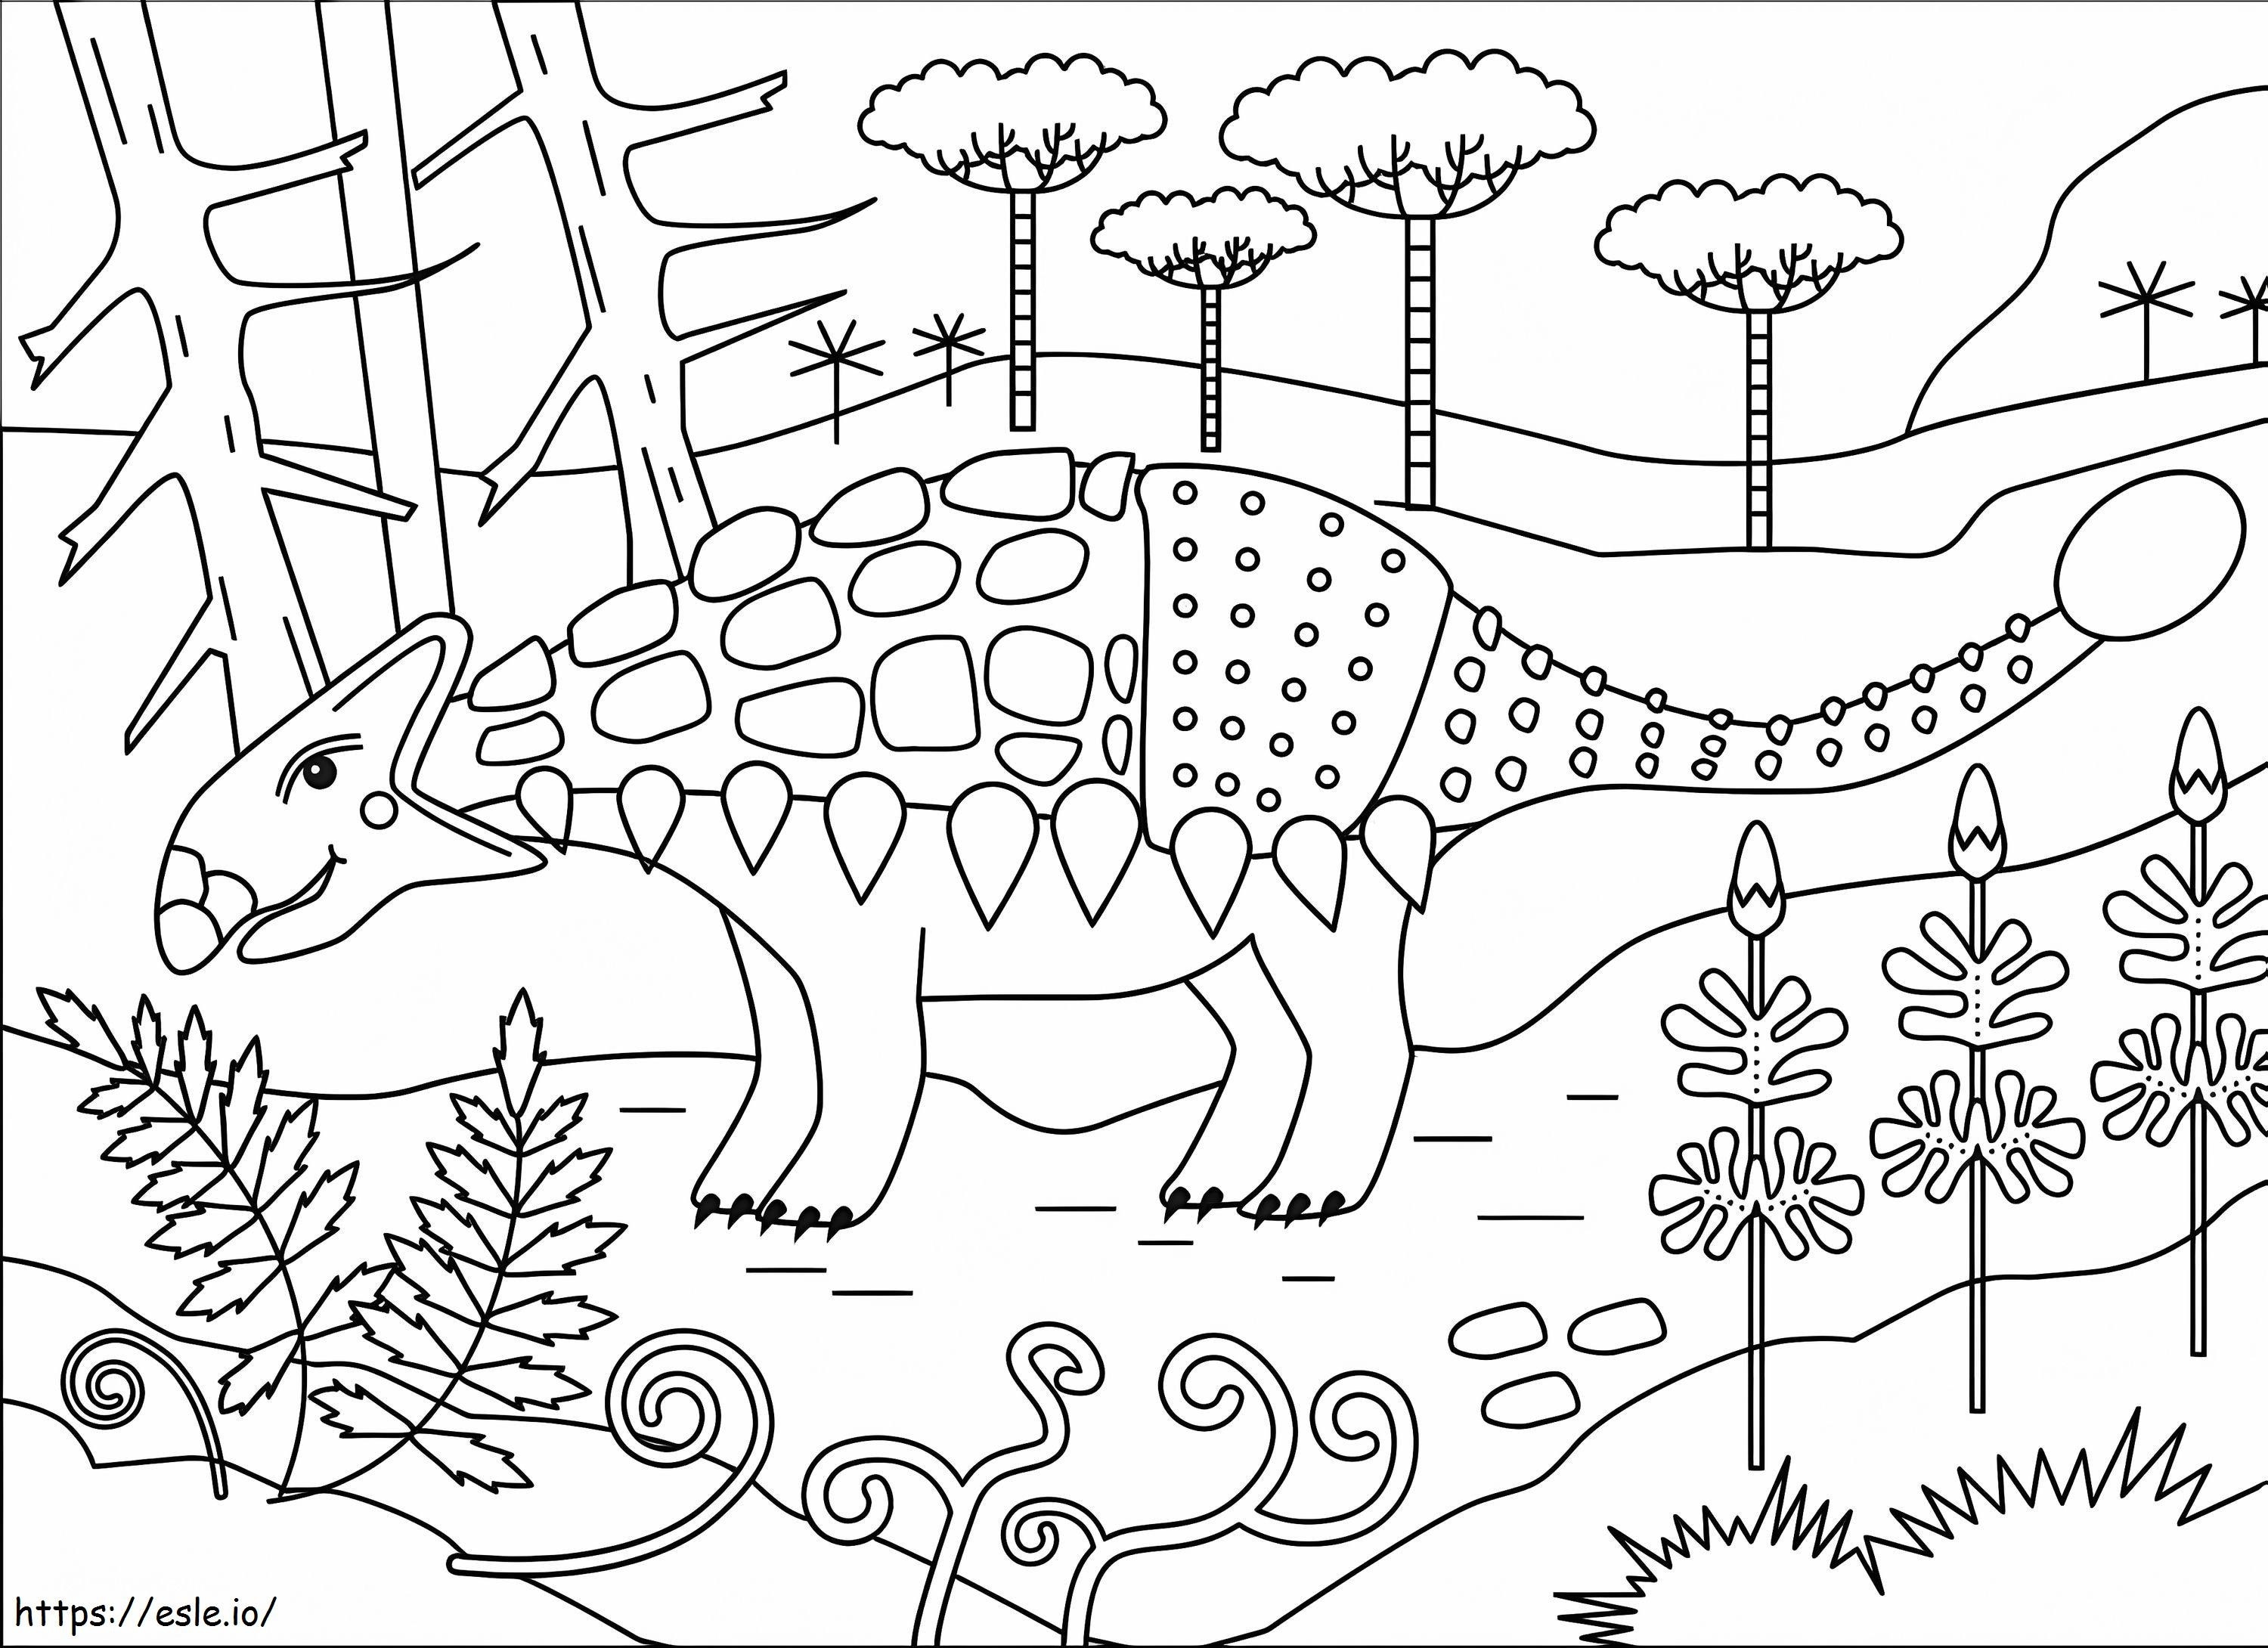 Ankylosaurus mudah Gambar Mewarnai